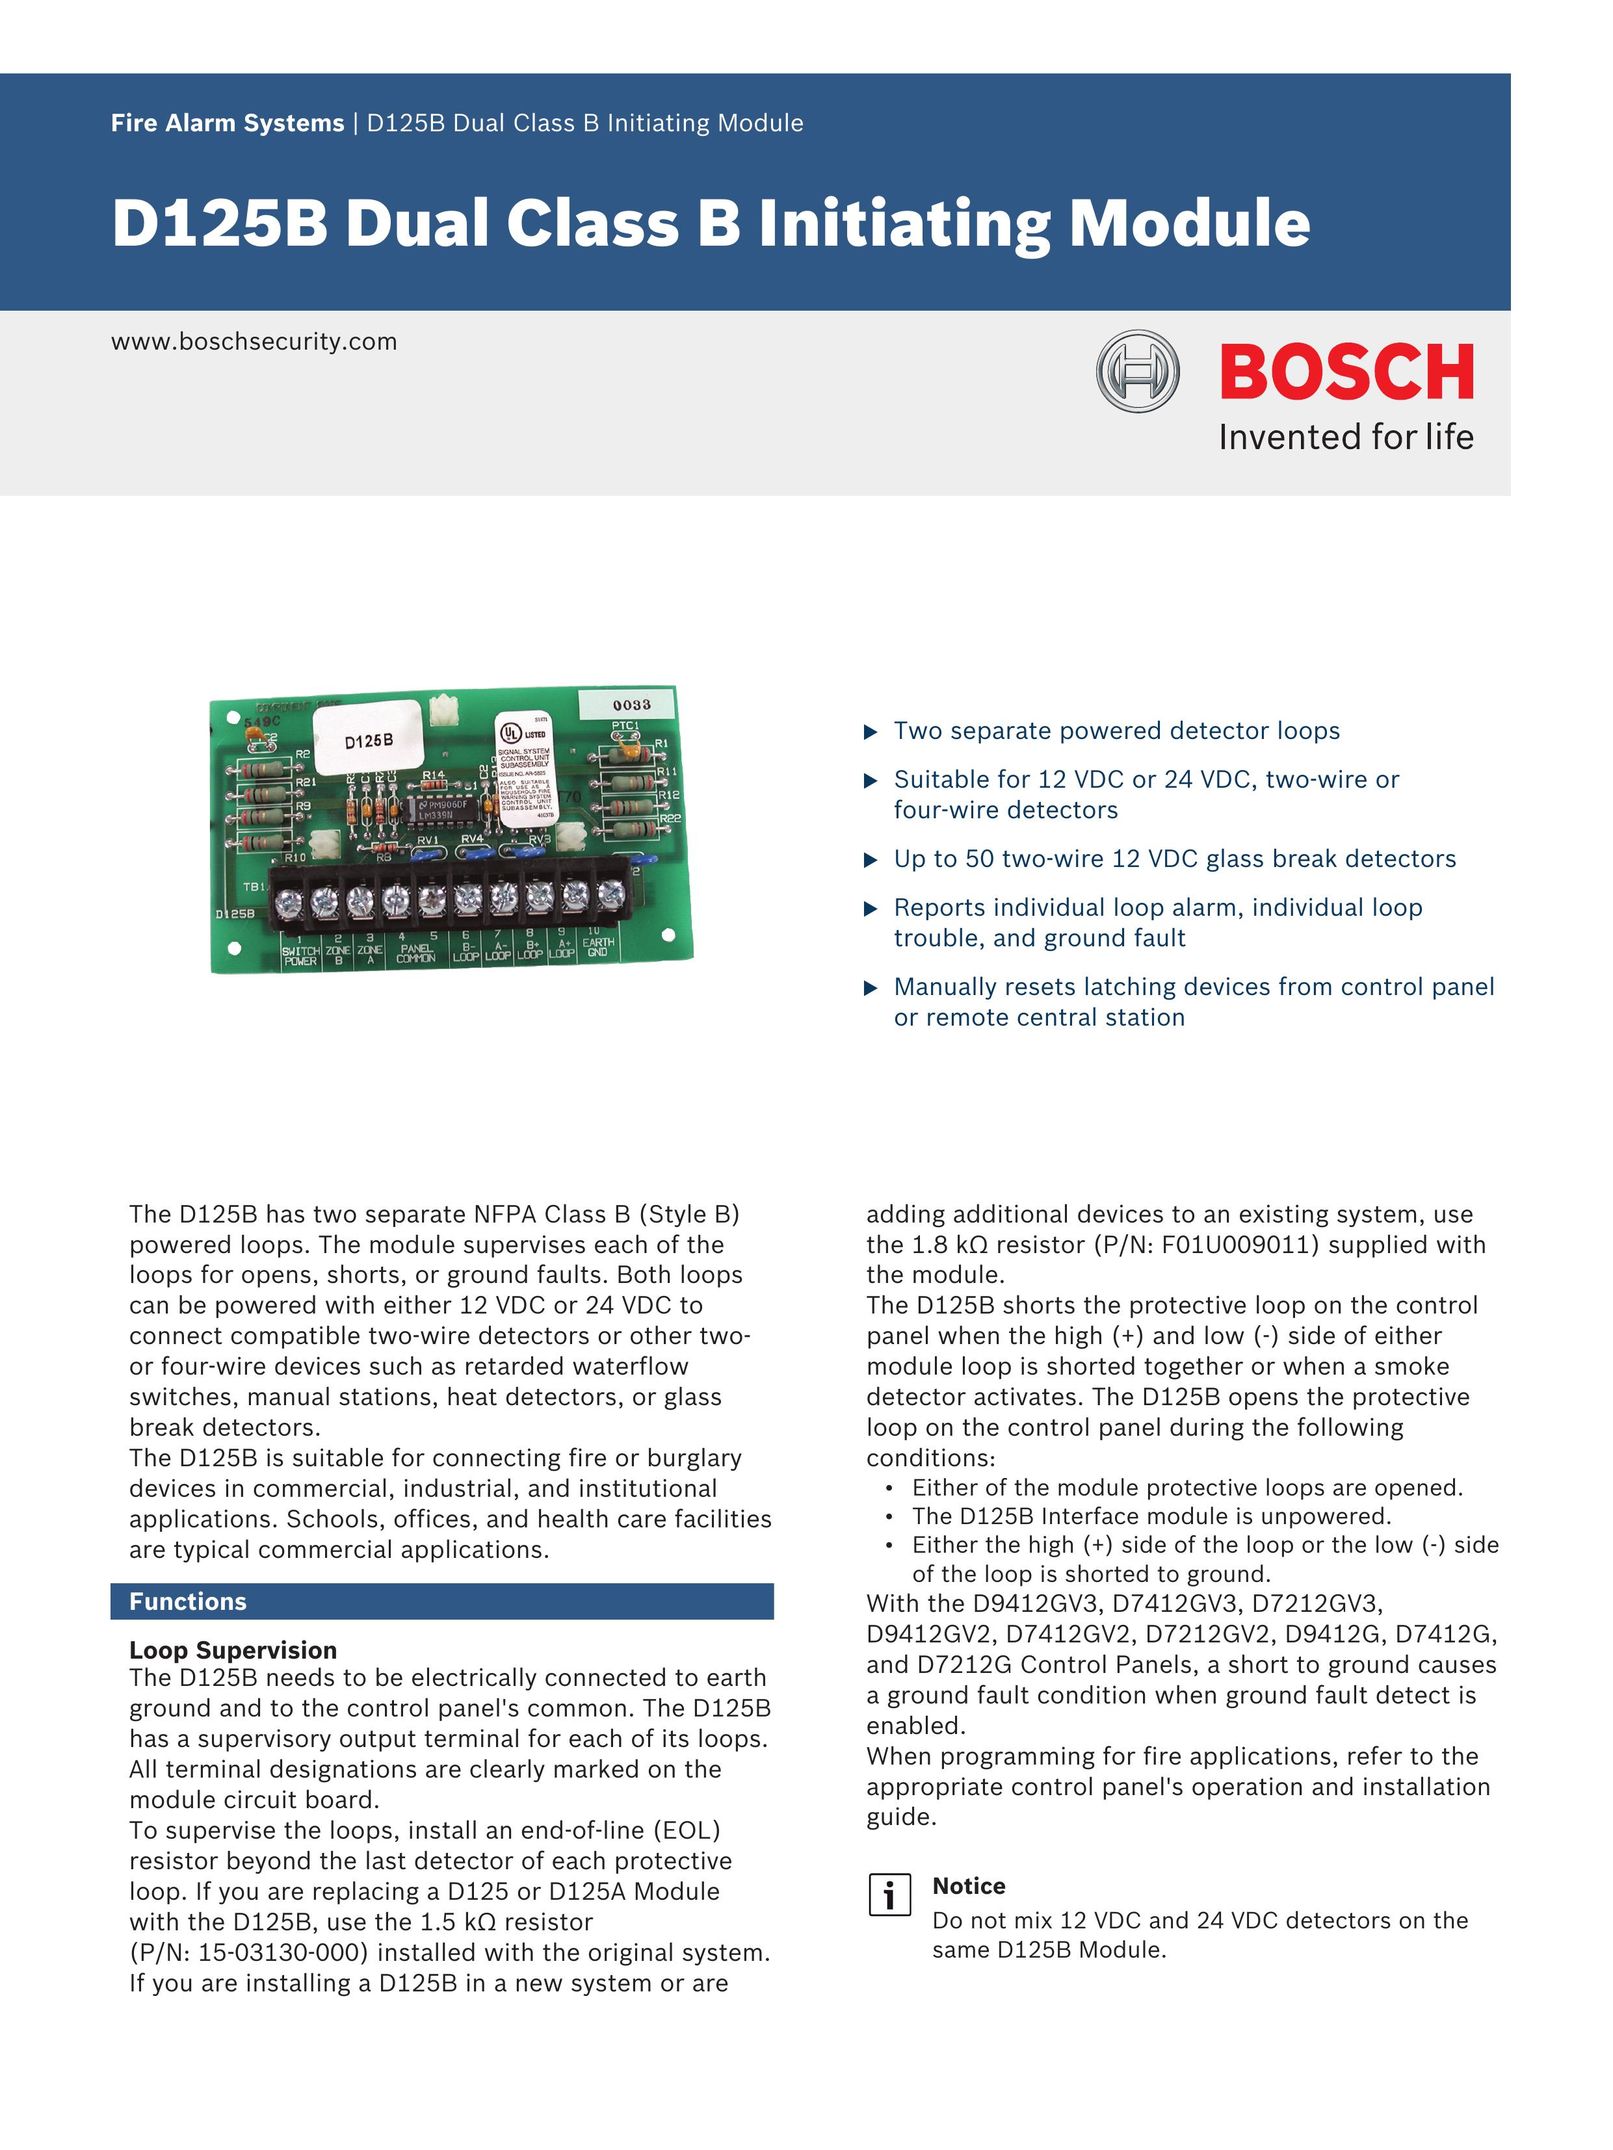 Bosch Appliances D125B Smoke Alarm User Manual